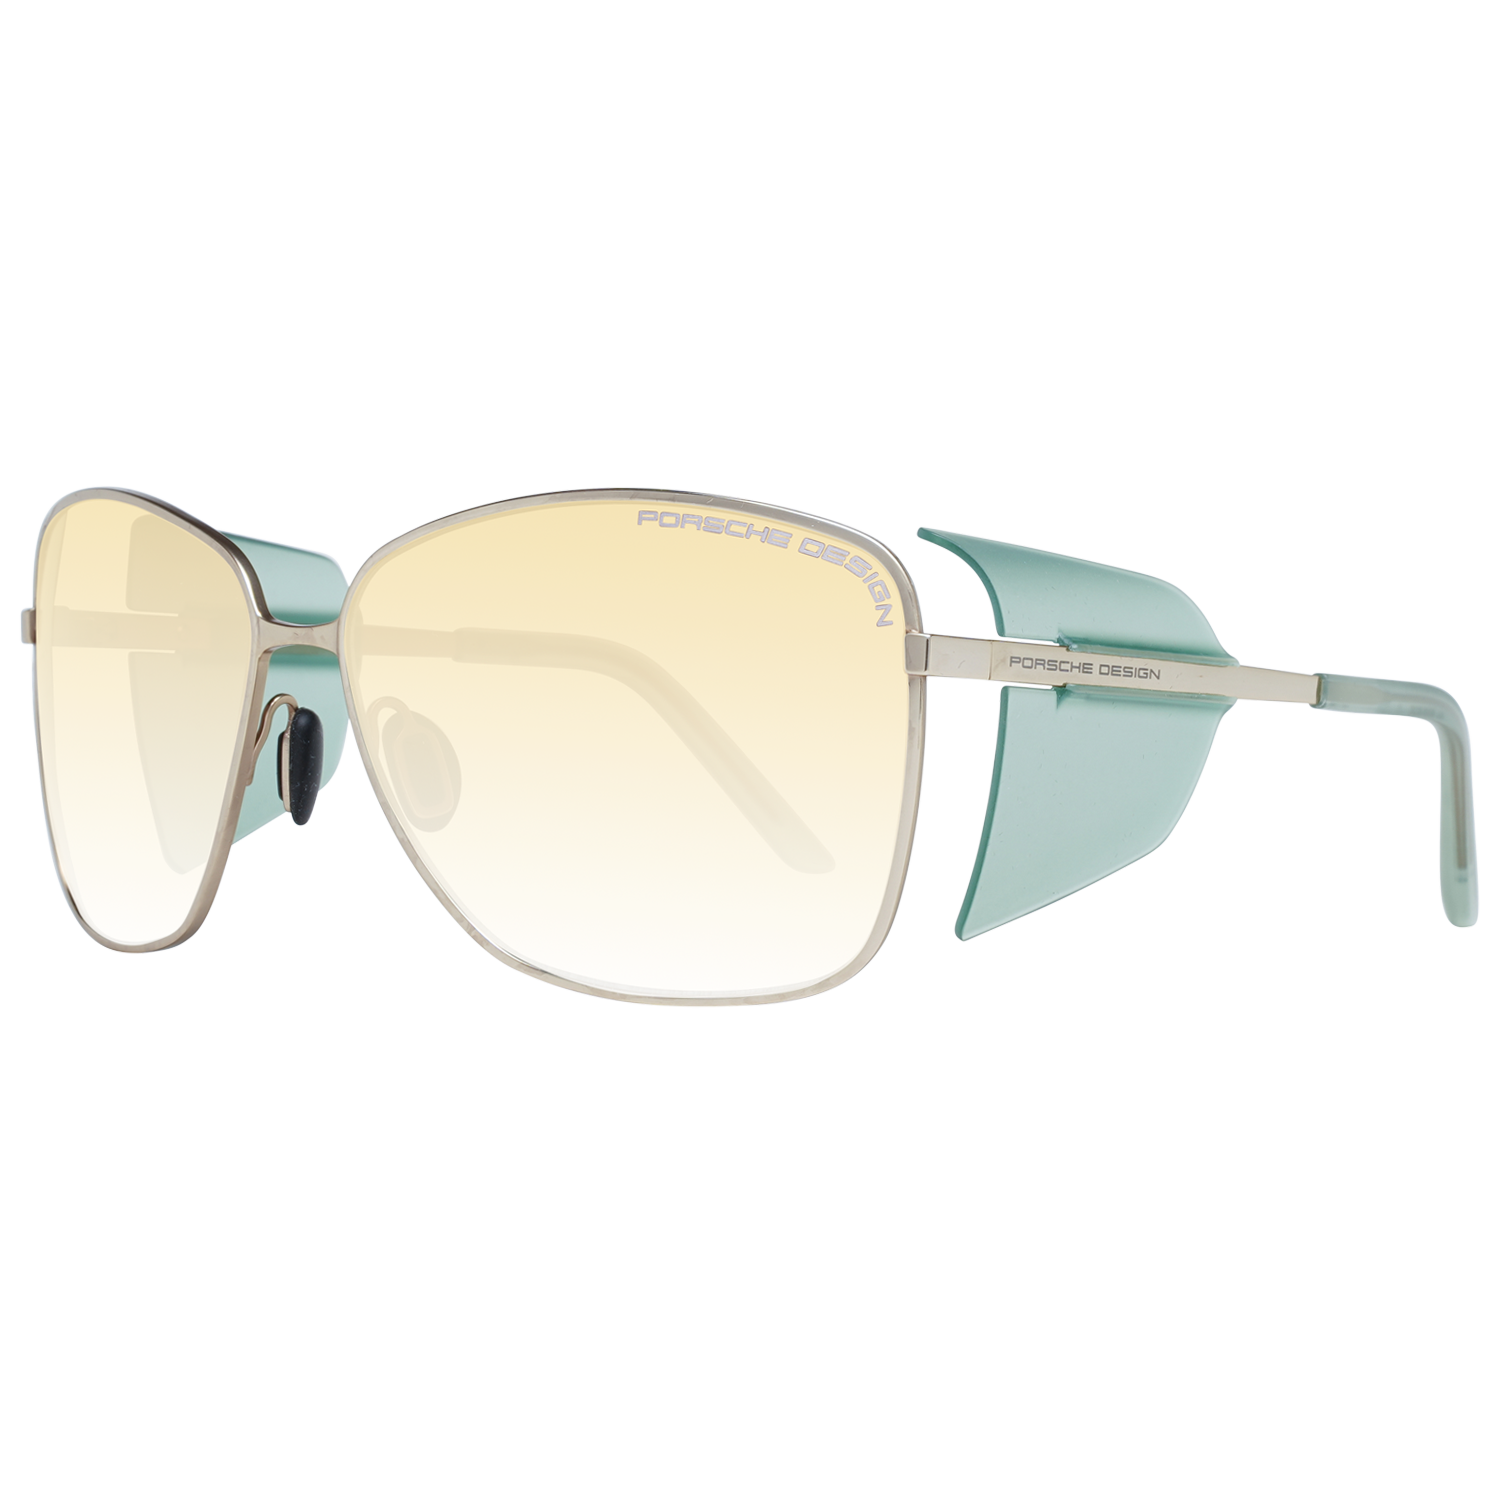 Porsche Design Sunglasses Porsche Design Sunglasses P8599 C 63 Titanium Eyeglasses Eyewear UK USA Australia 